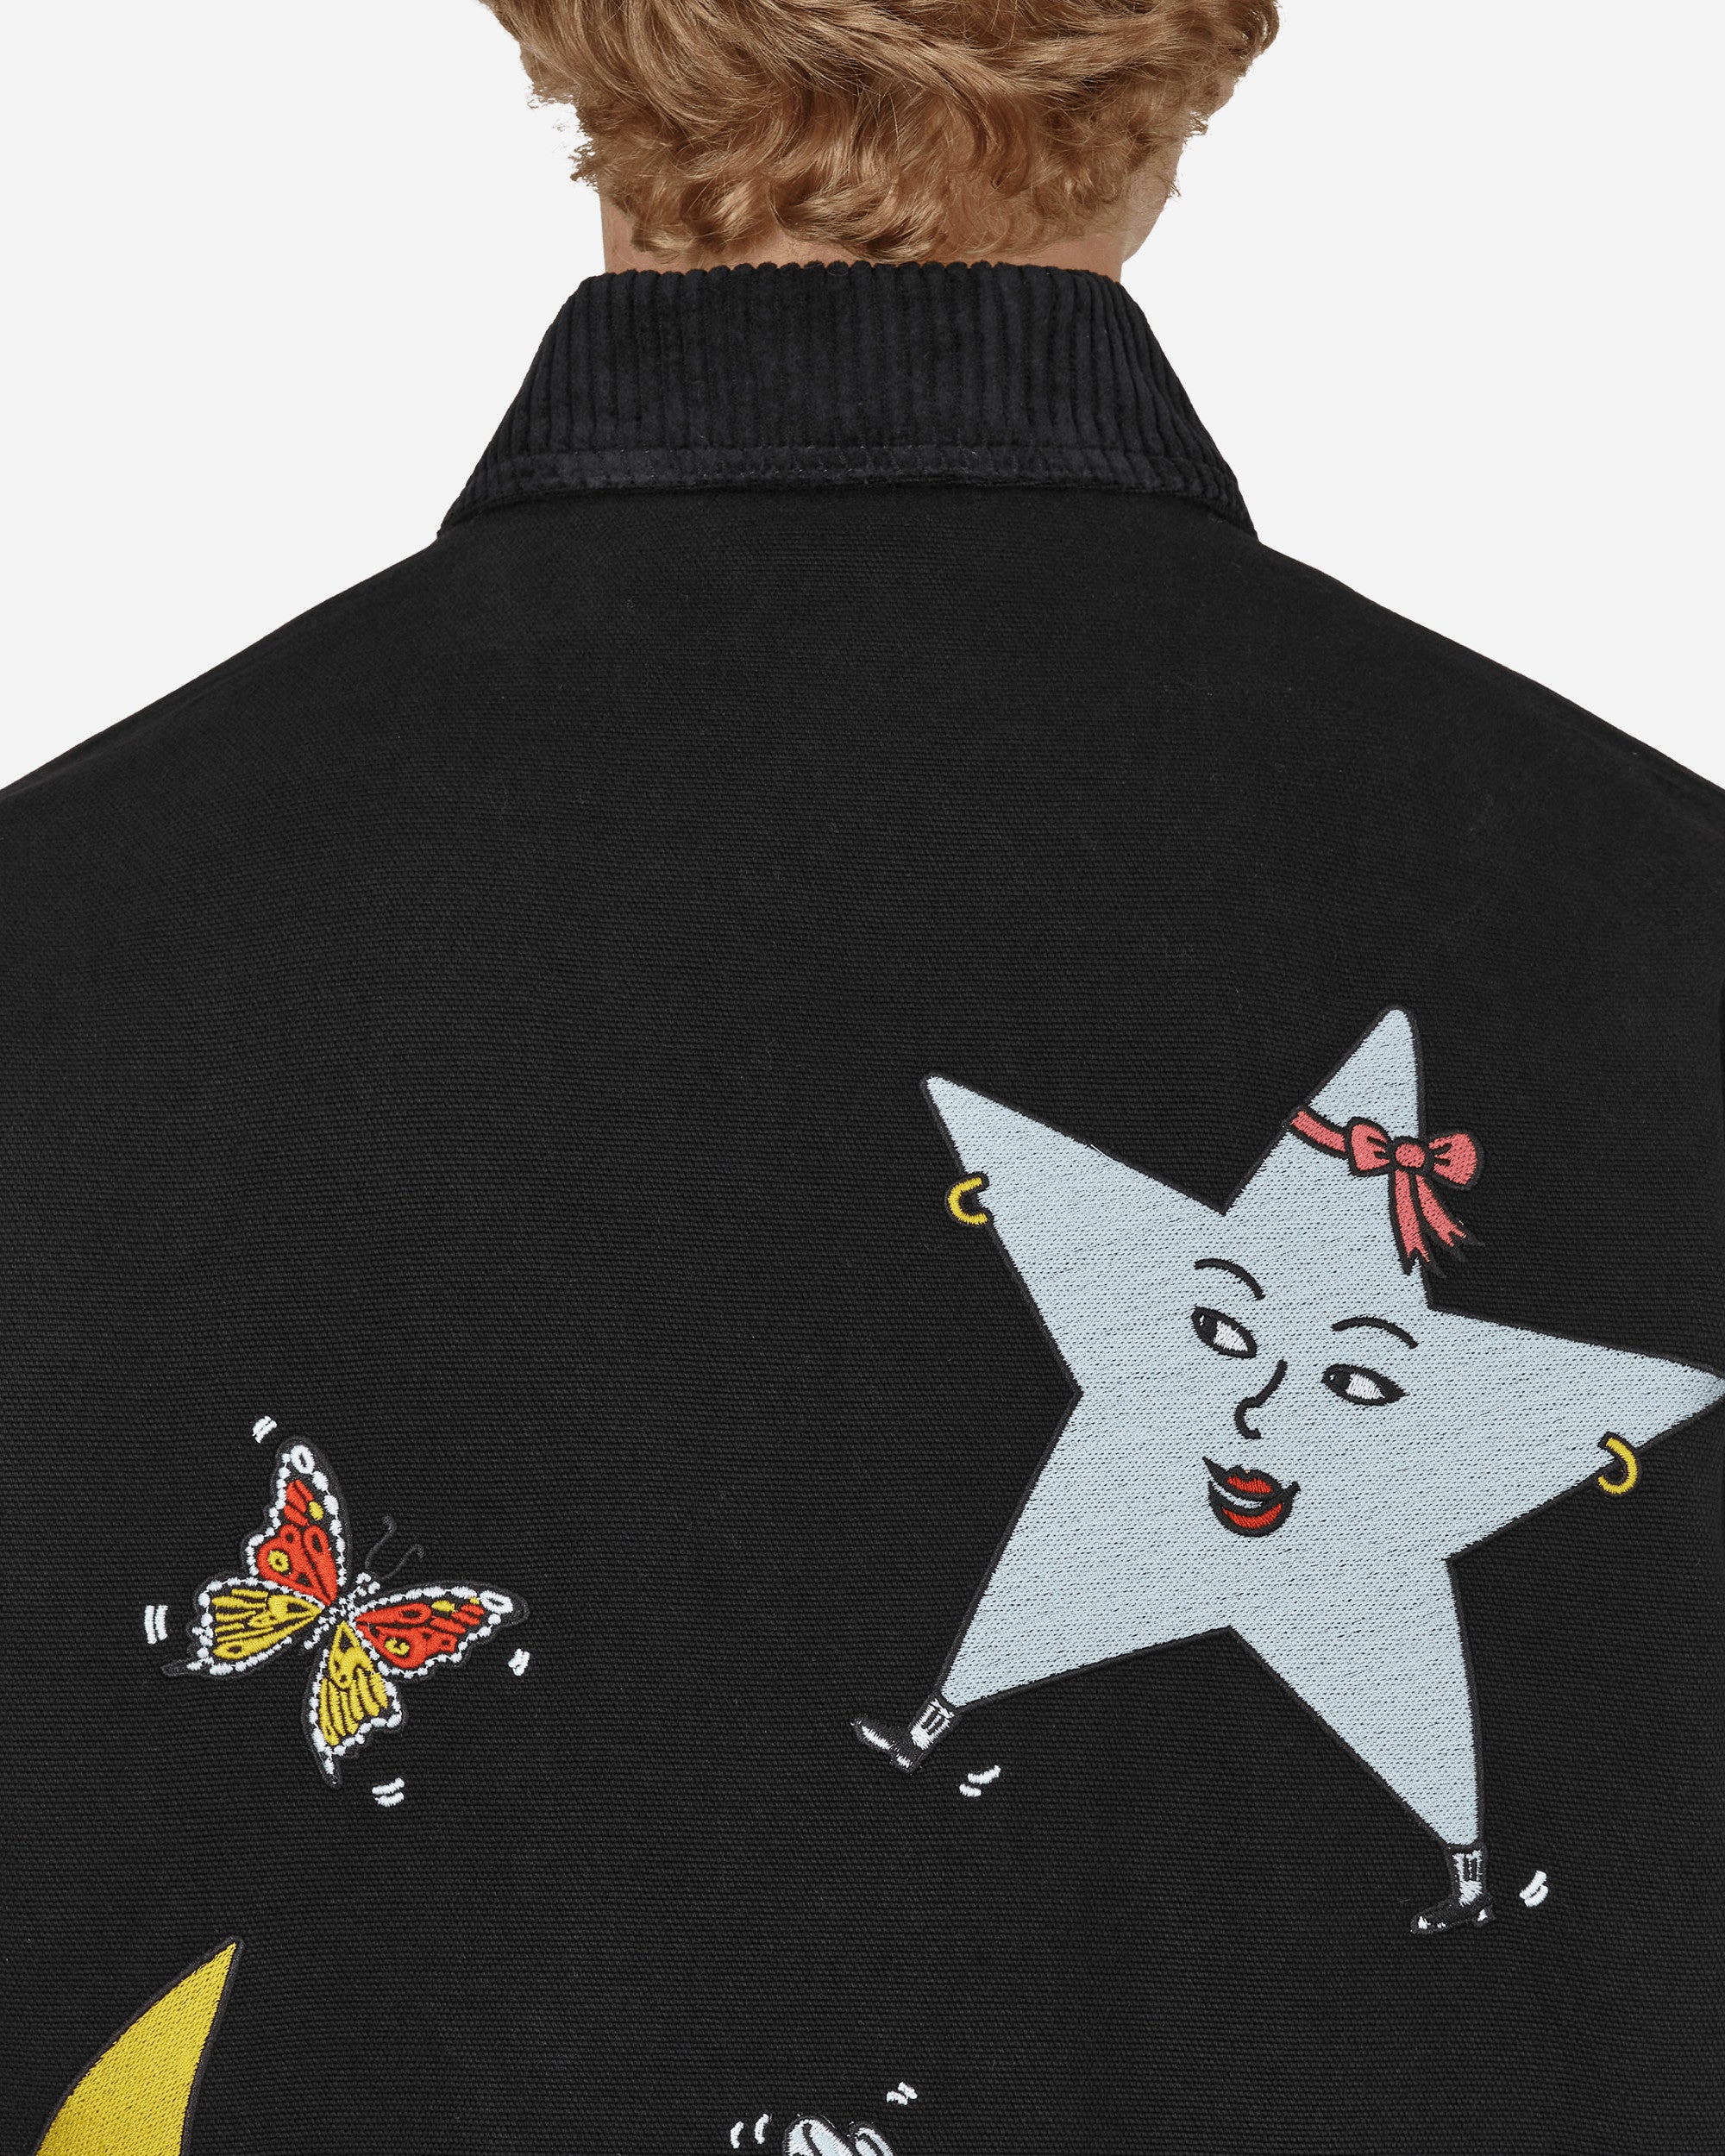 Sky High Farm Workwear Canvas Embroidered Chore Jacket Black Coats and Jackets Jackets SHF02C008 1